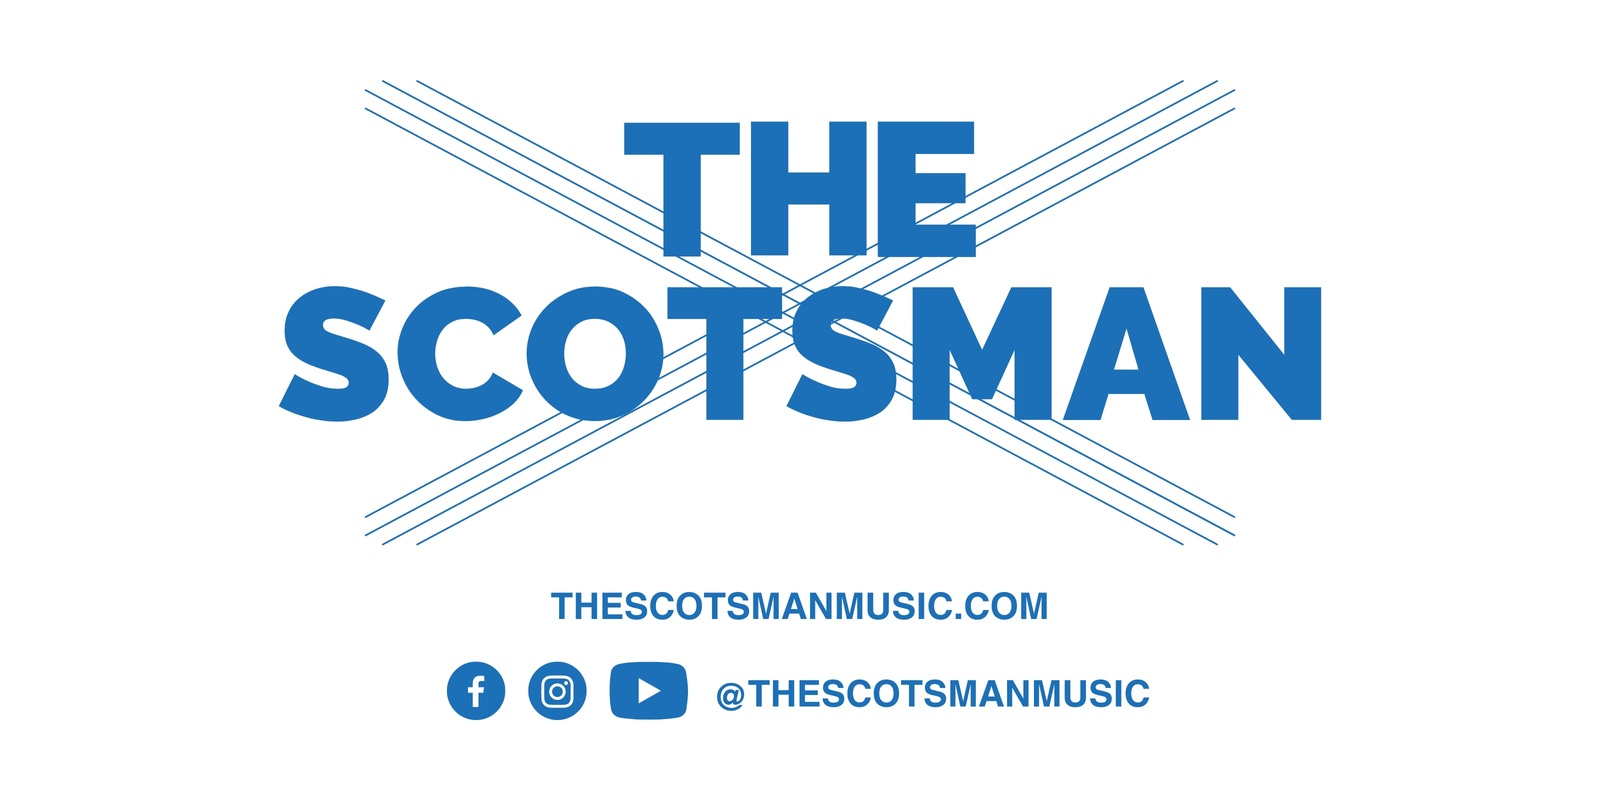 The Scotsman's banner